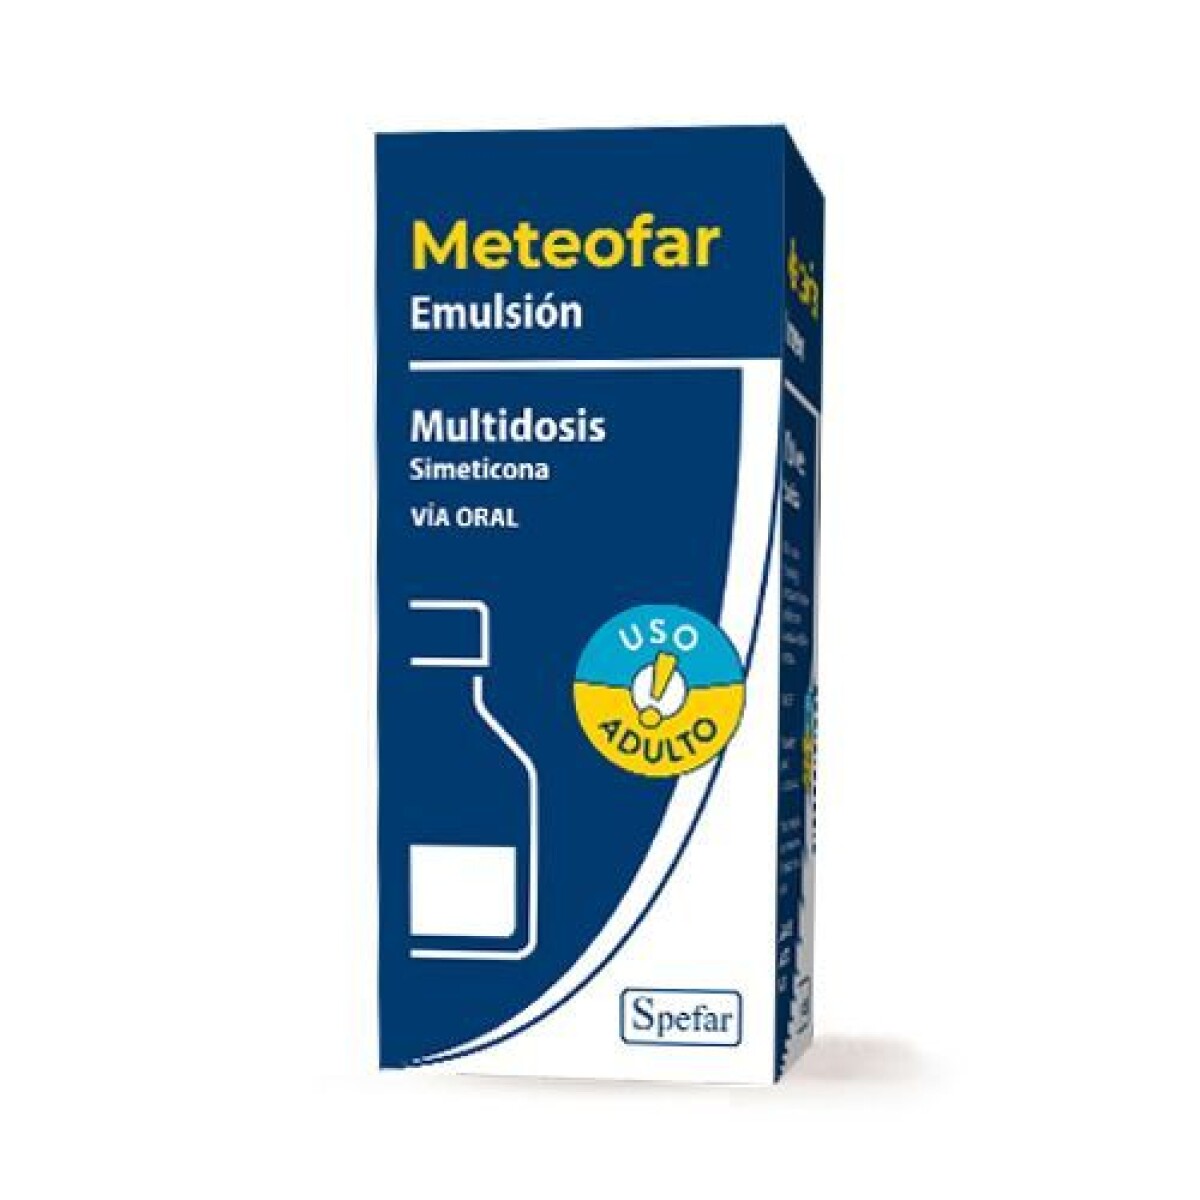 Meteofar Emulsion Multidosis 